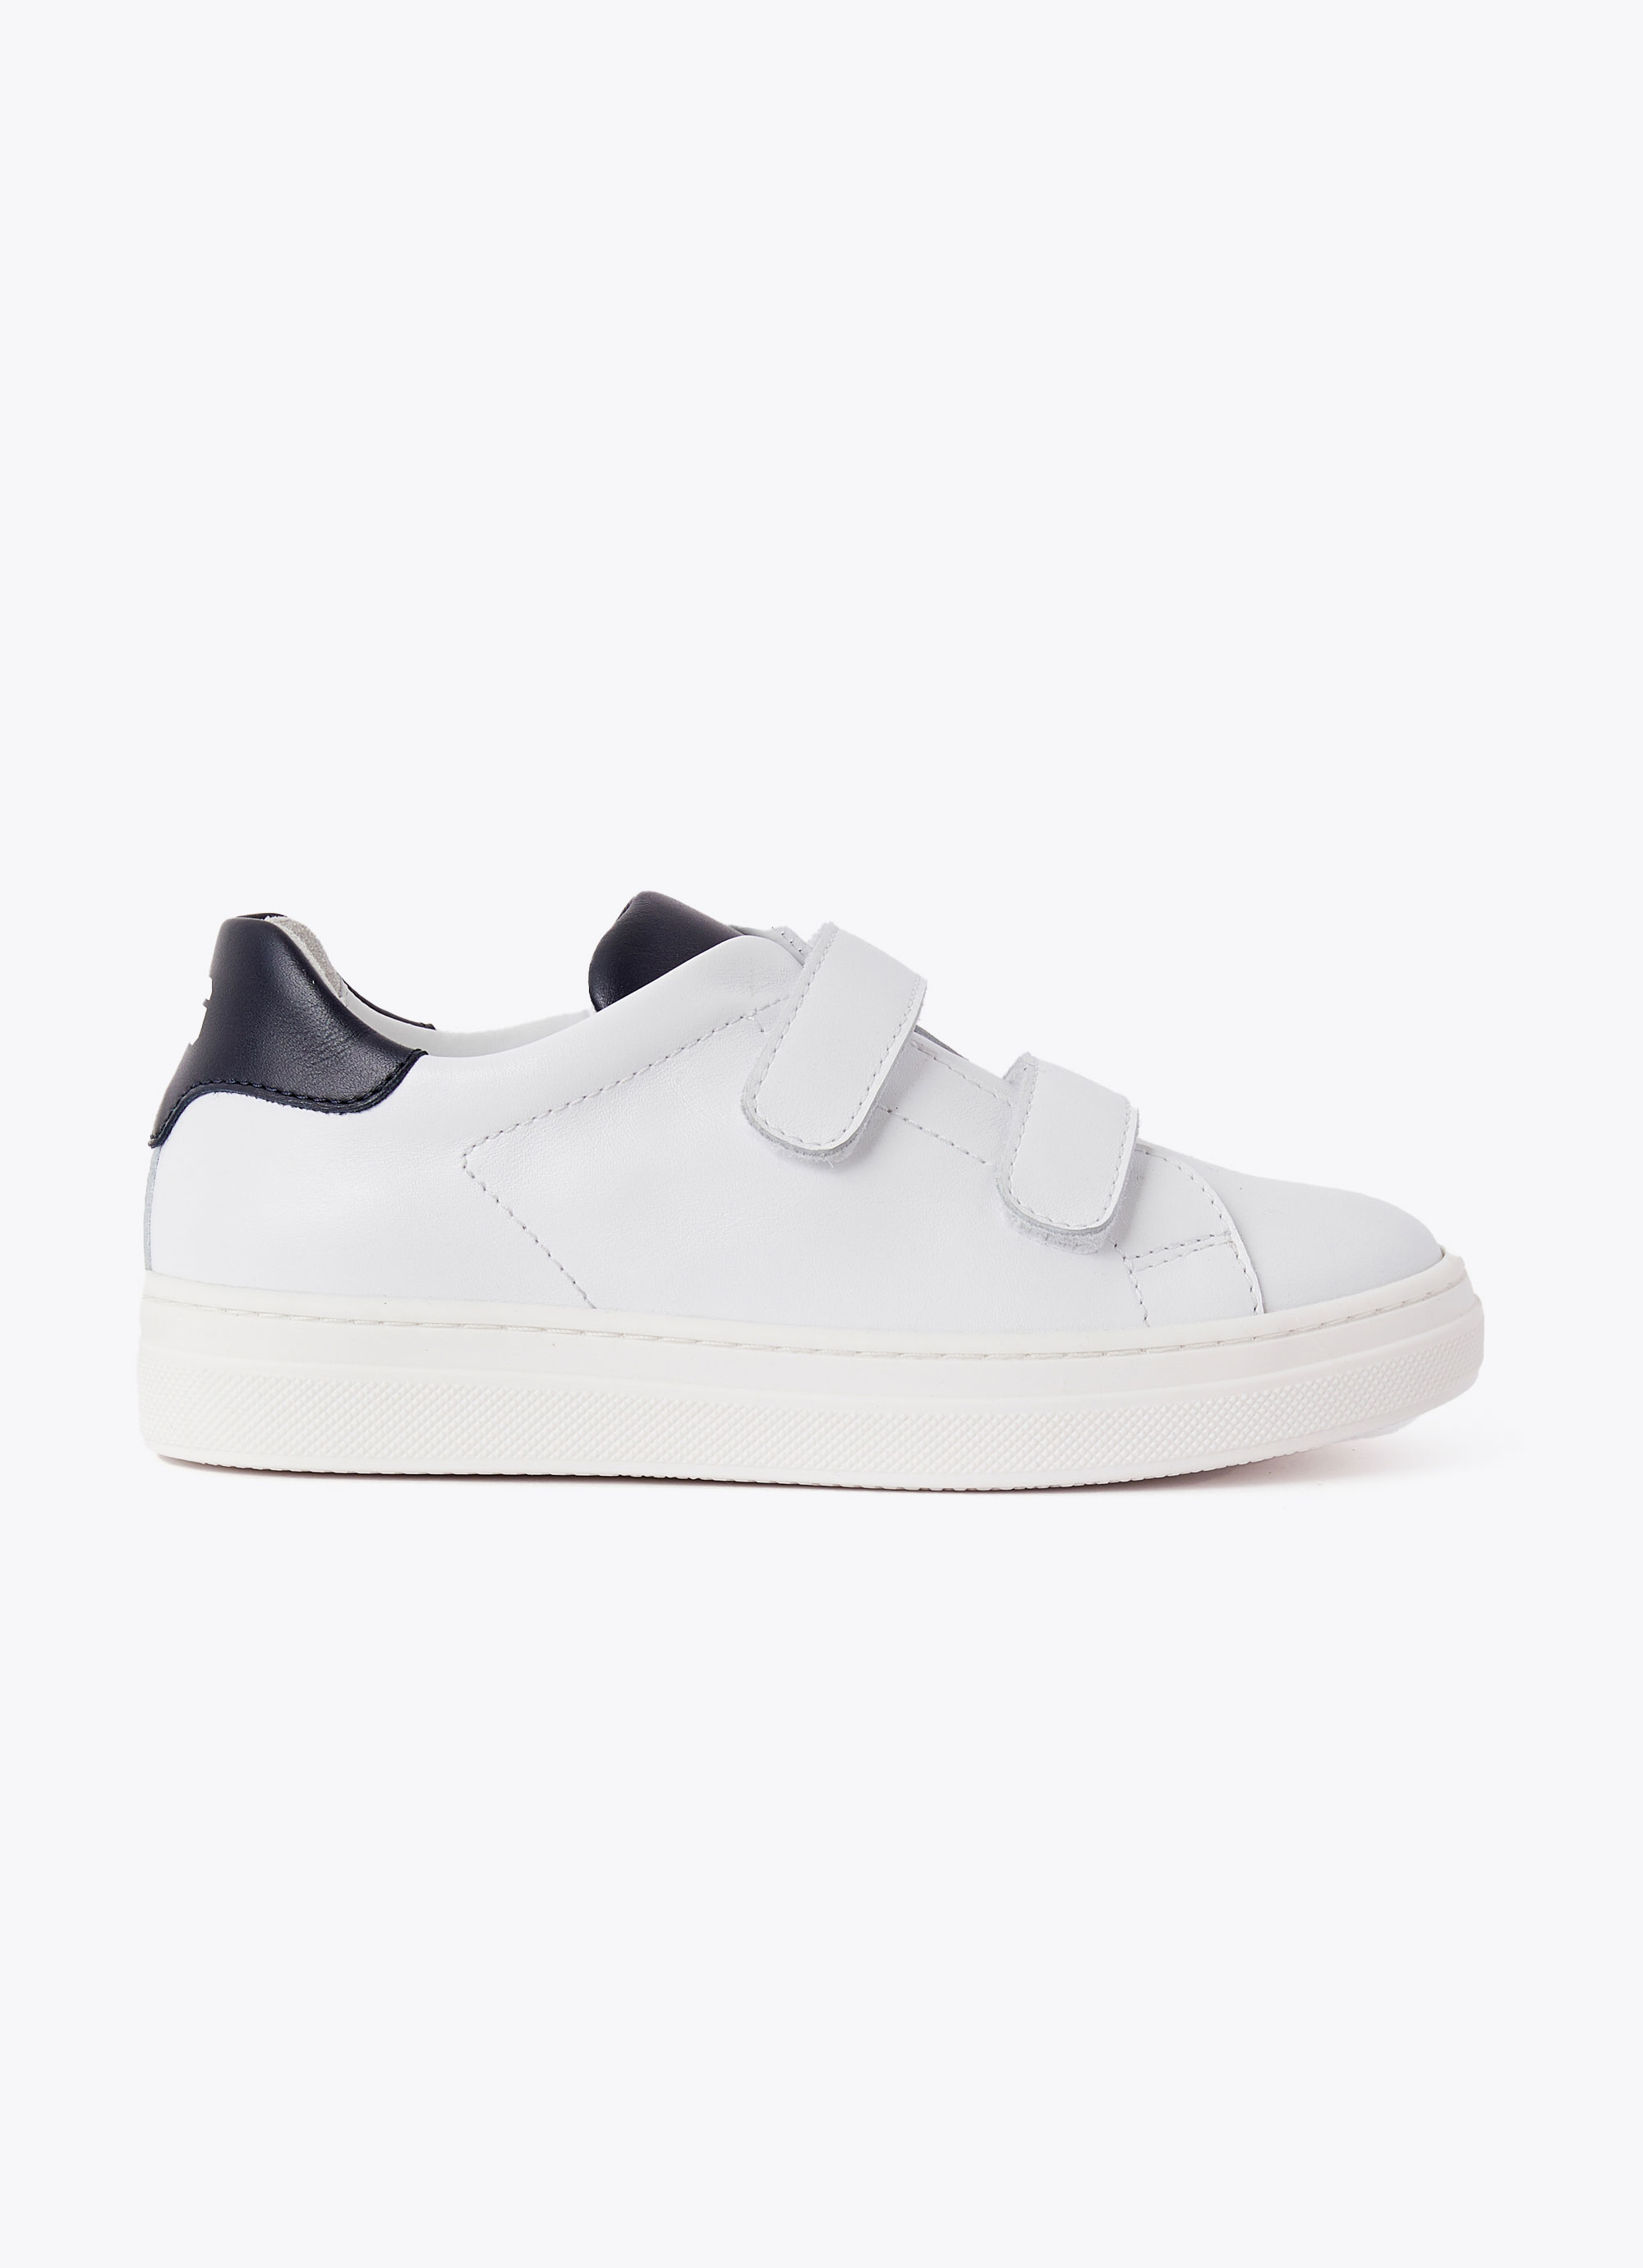 White leather sneakers with riptape straps - White | Il Gufo